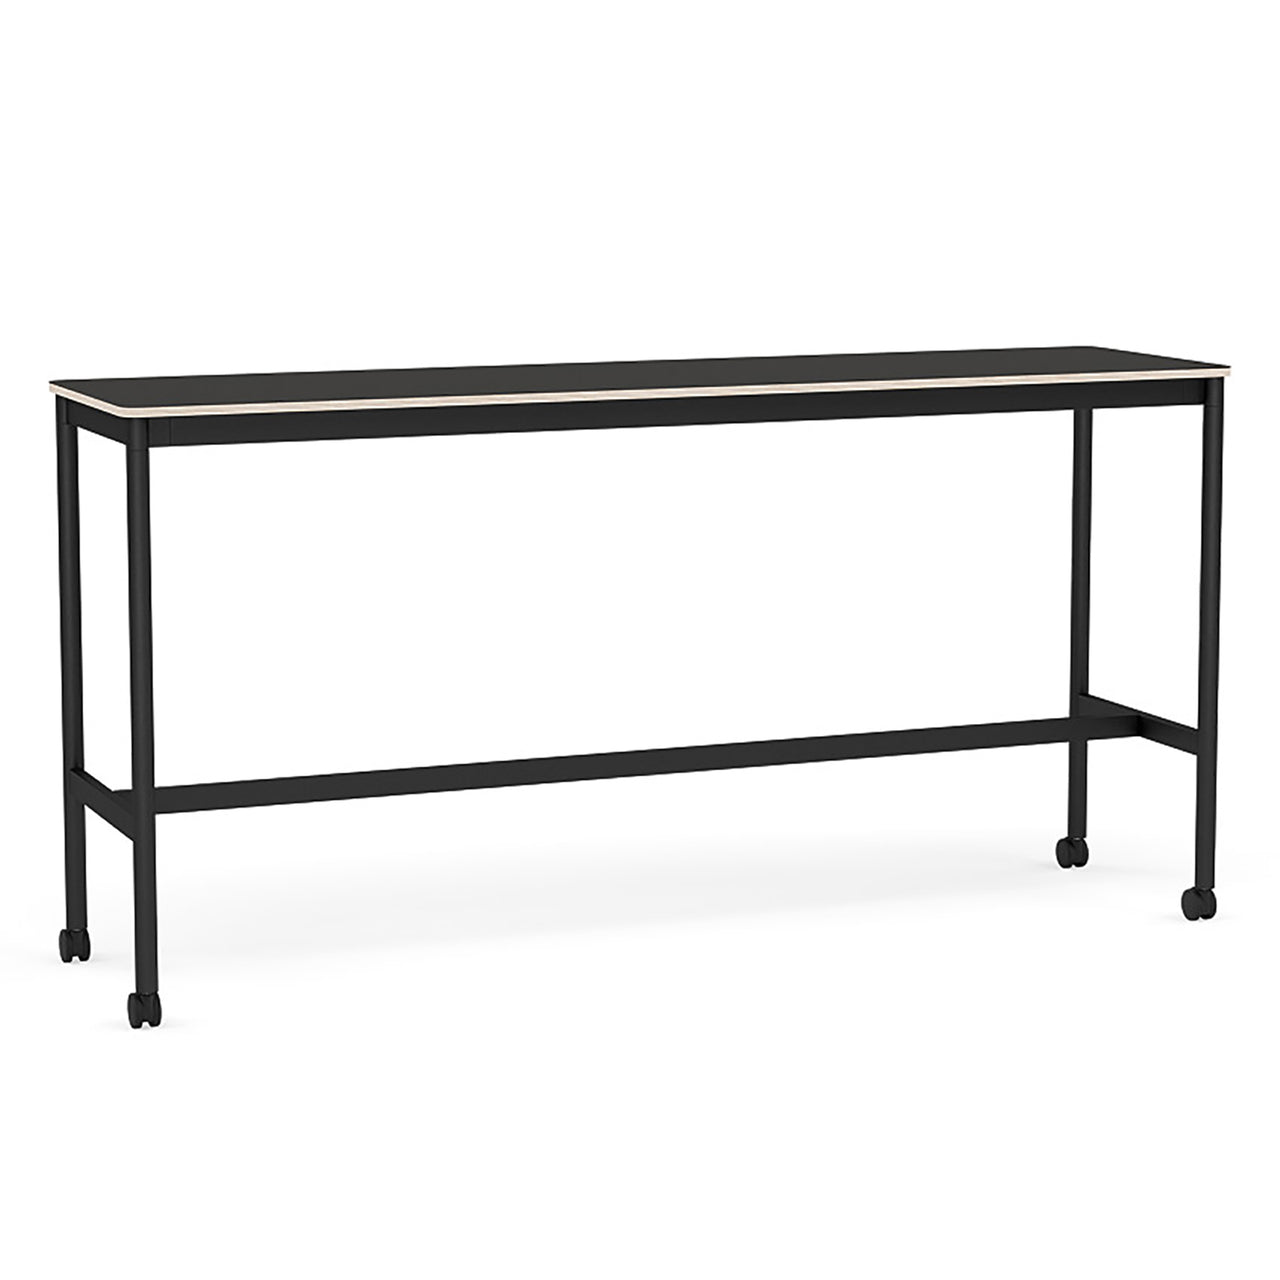 Base High Table with Castors: 190 + Black Linoleum + Plywood Edge + Black